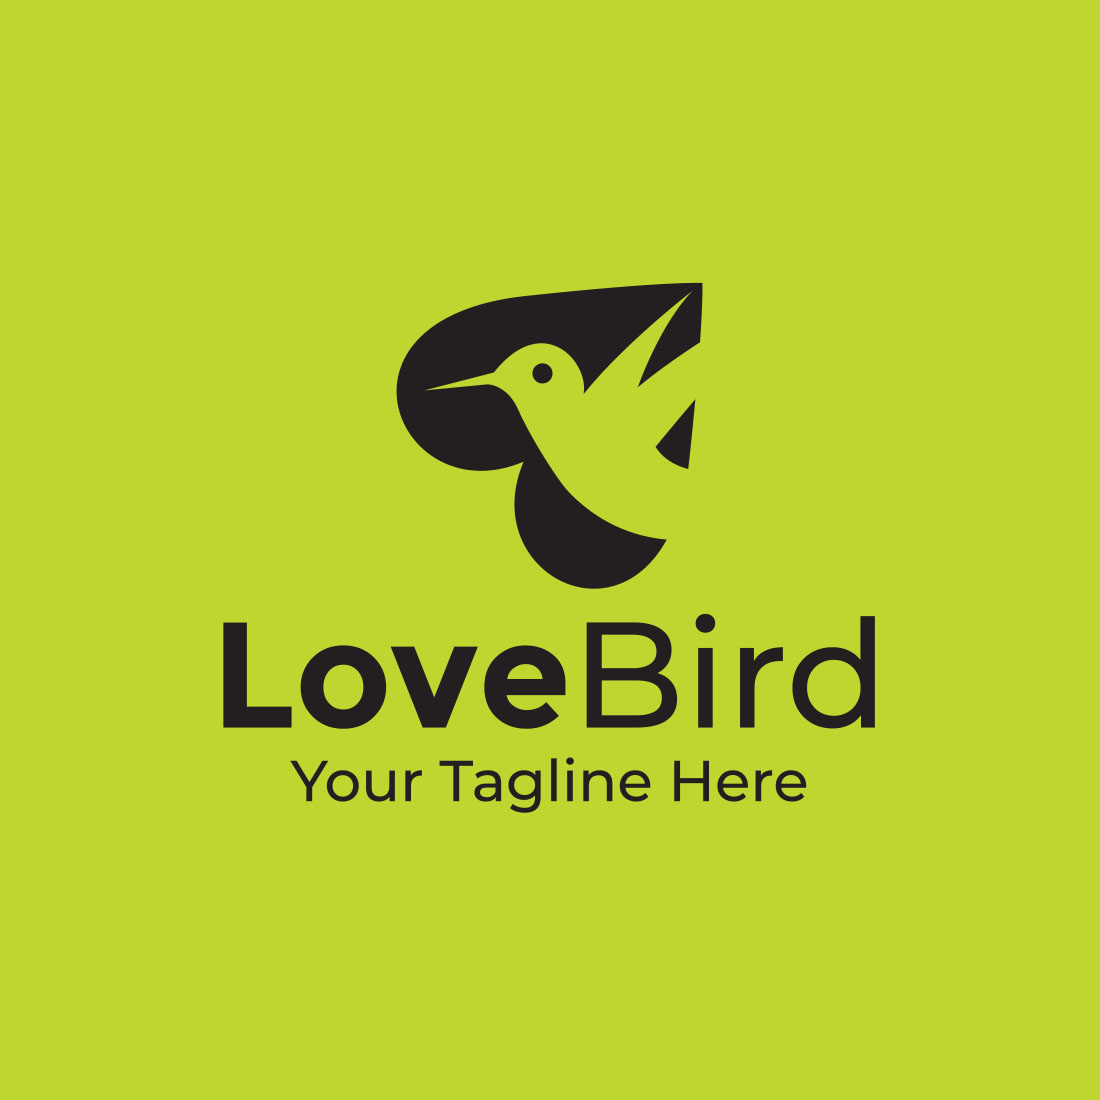 Love Bird Logo with green background.